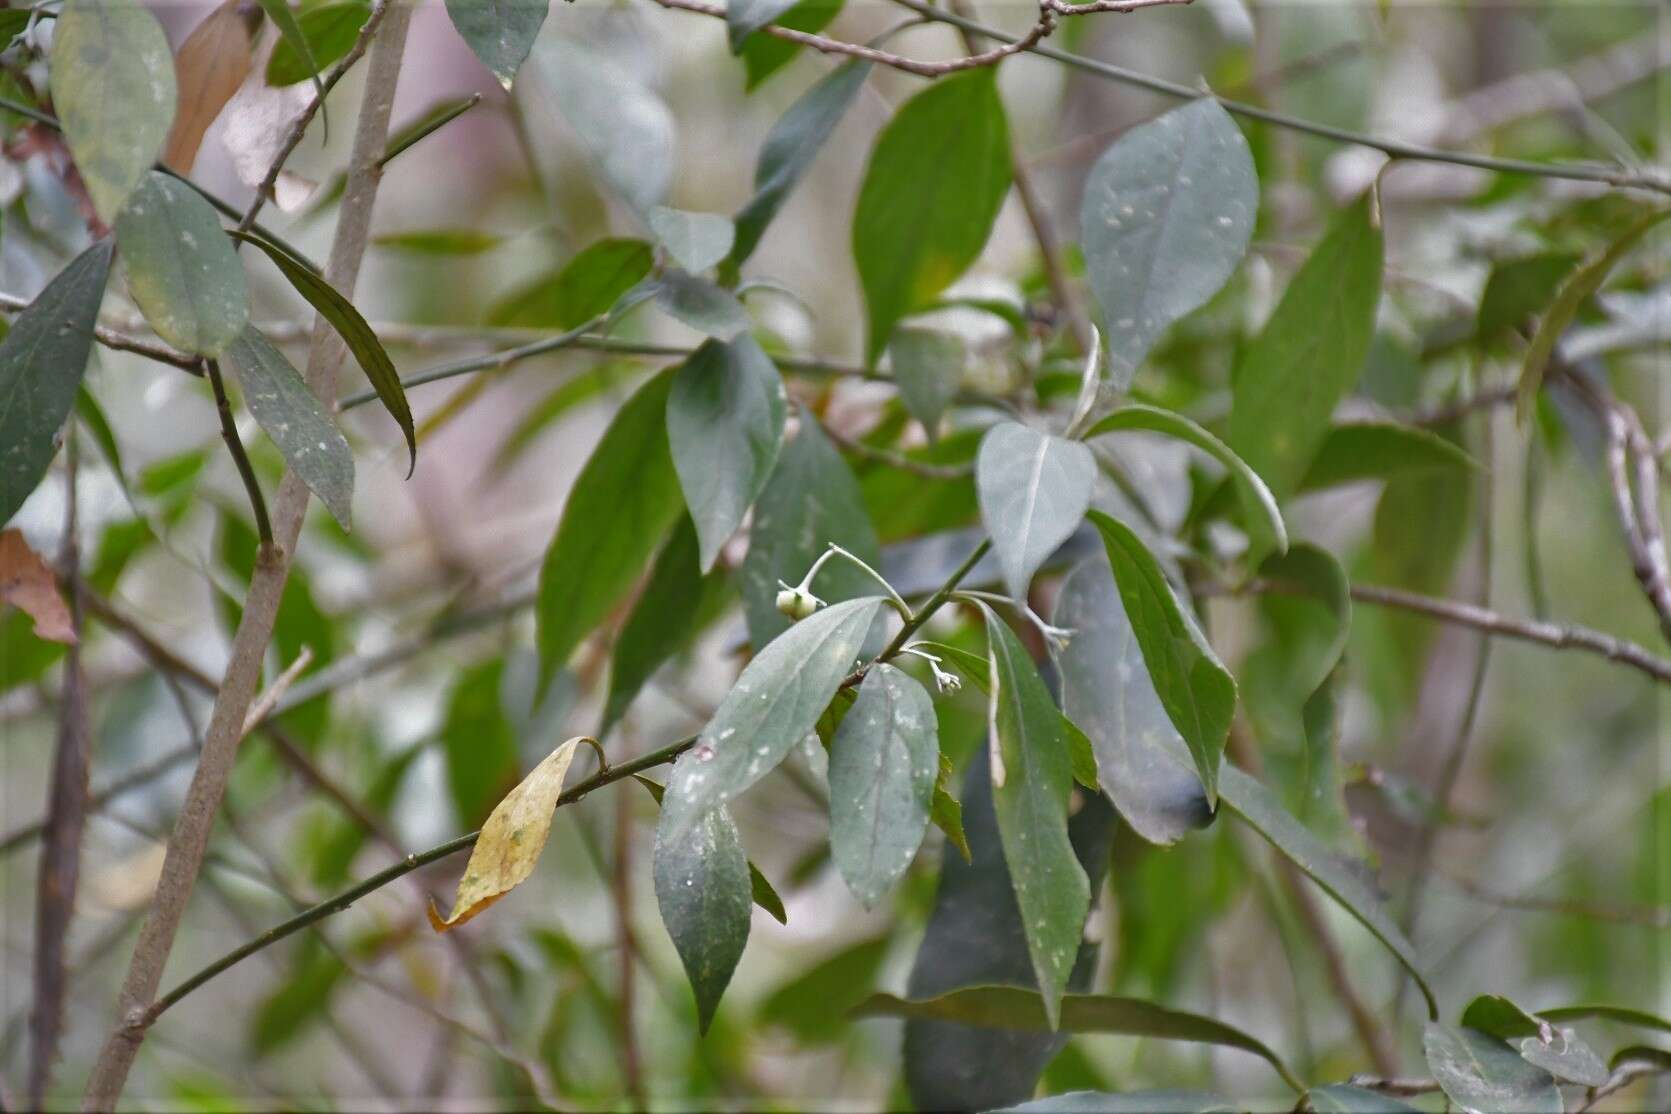 Image of Chiropetalum schiedeanum (Müll. Arg.) Pax